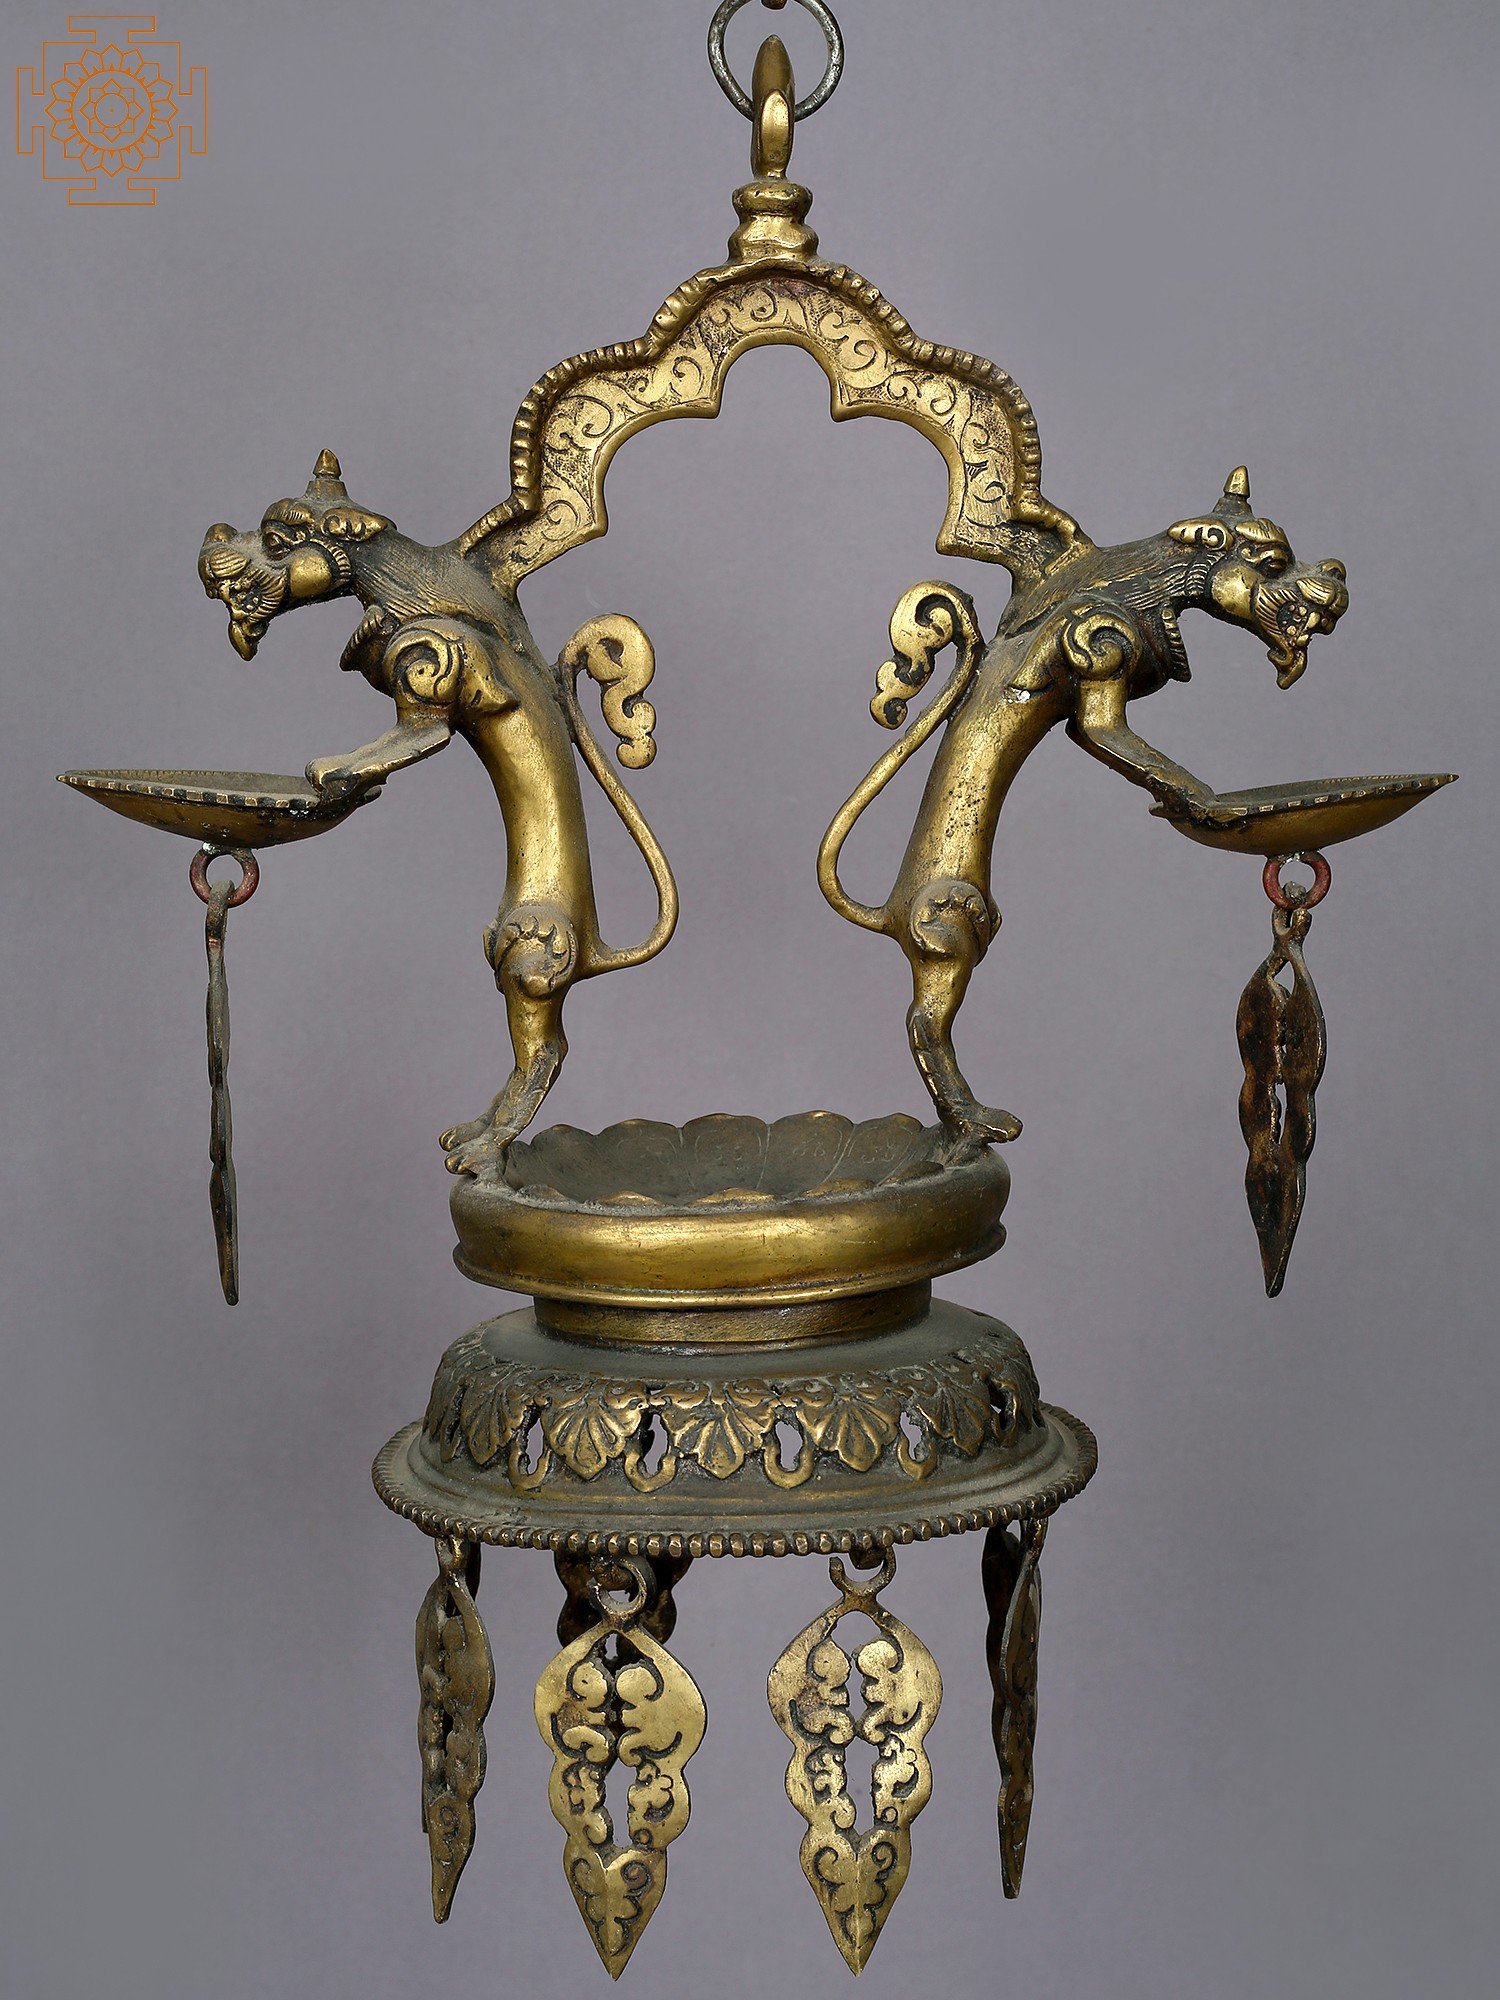 12 Small Hanging Brass Stupa Oil Lamp from Nepal